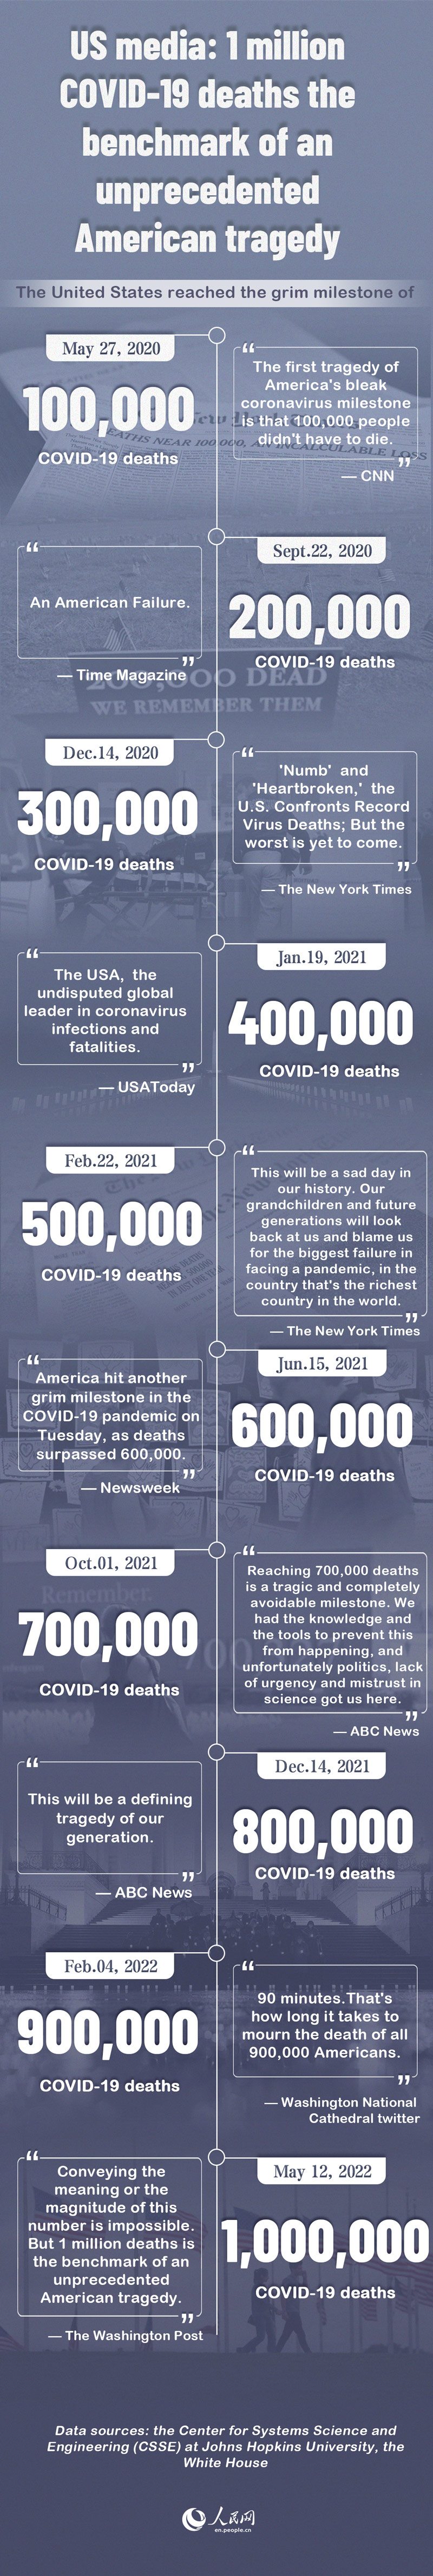 US media: 1 million COVID-19 deaths the benchmark of an unprecedented American tragedy 